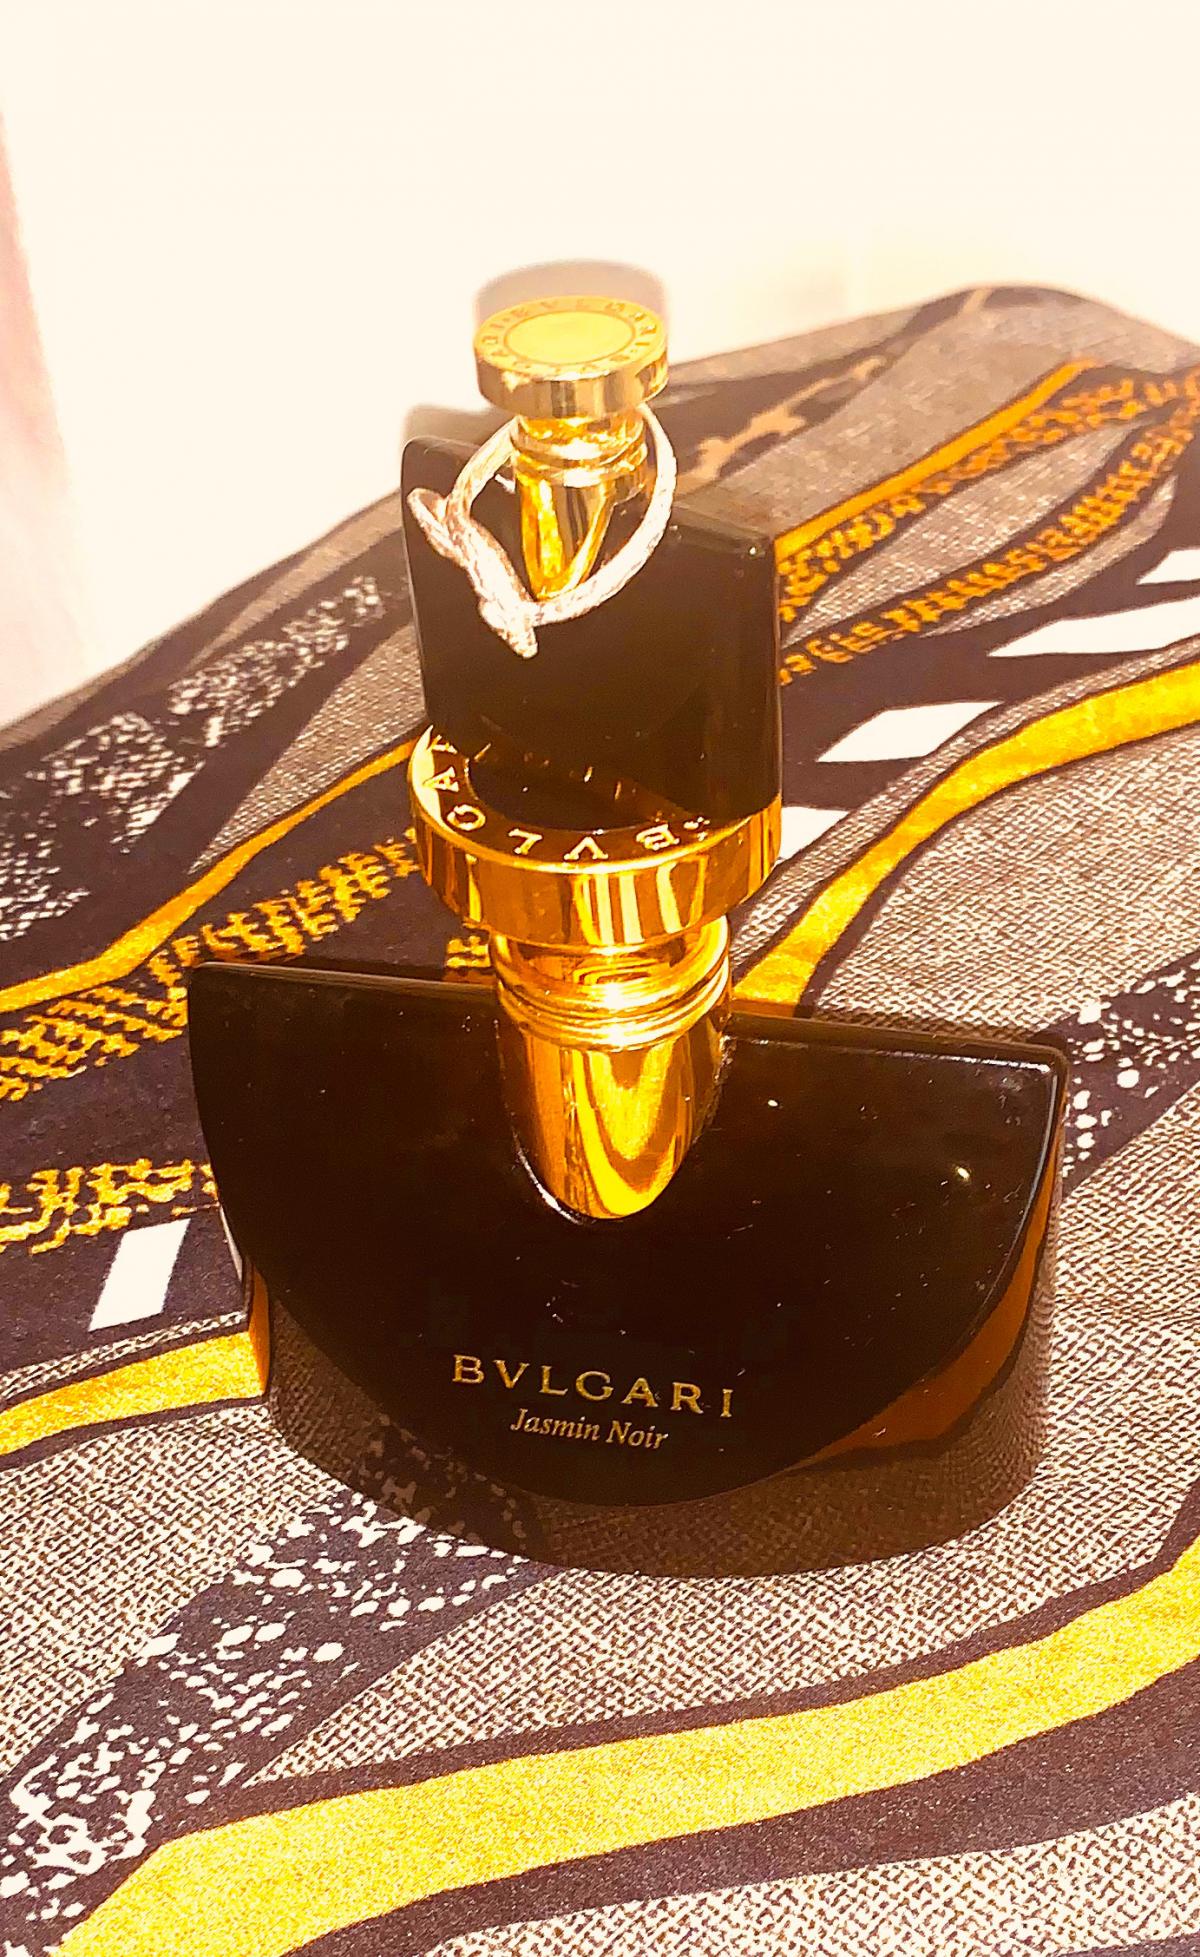 Jasmin Noir Bvlgari perfume - a fragrance for women 2008